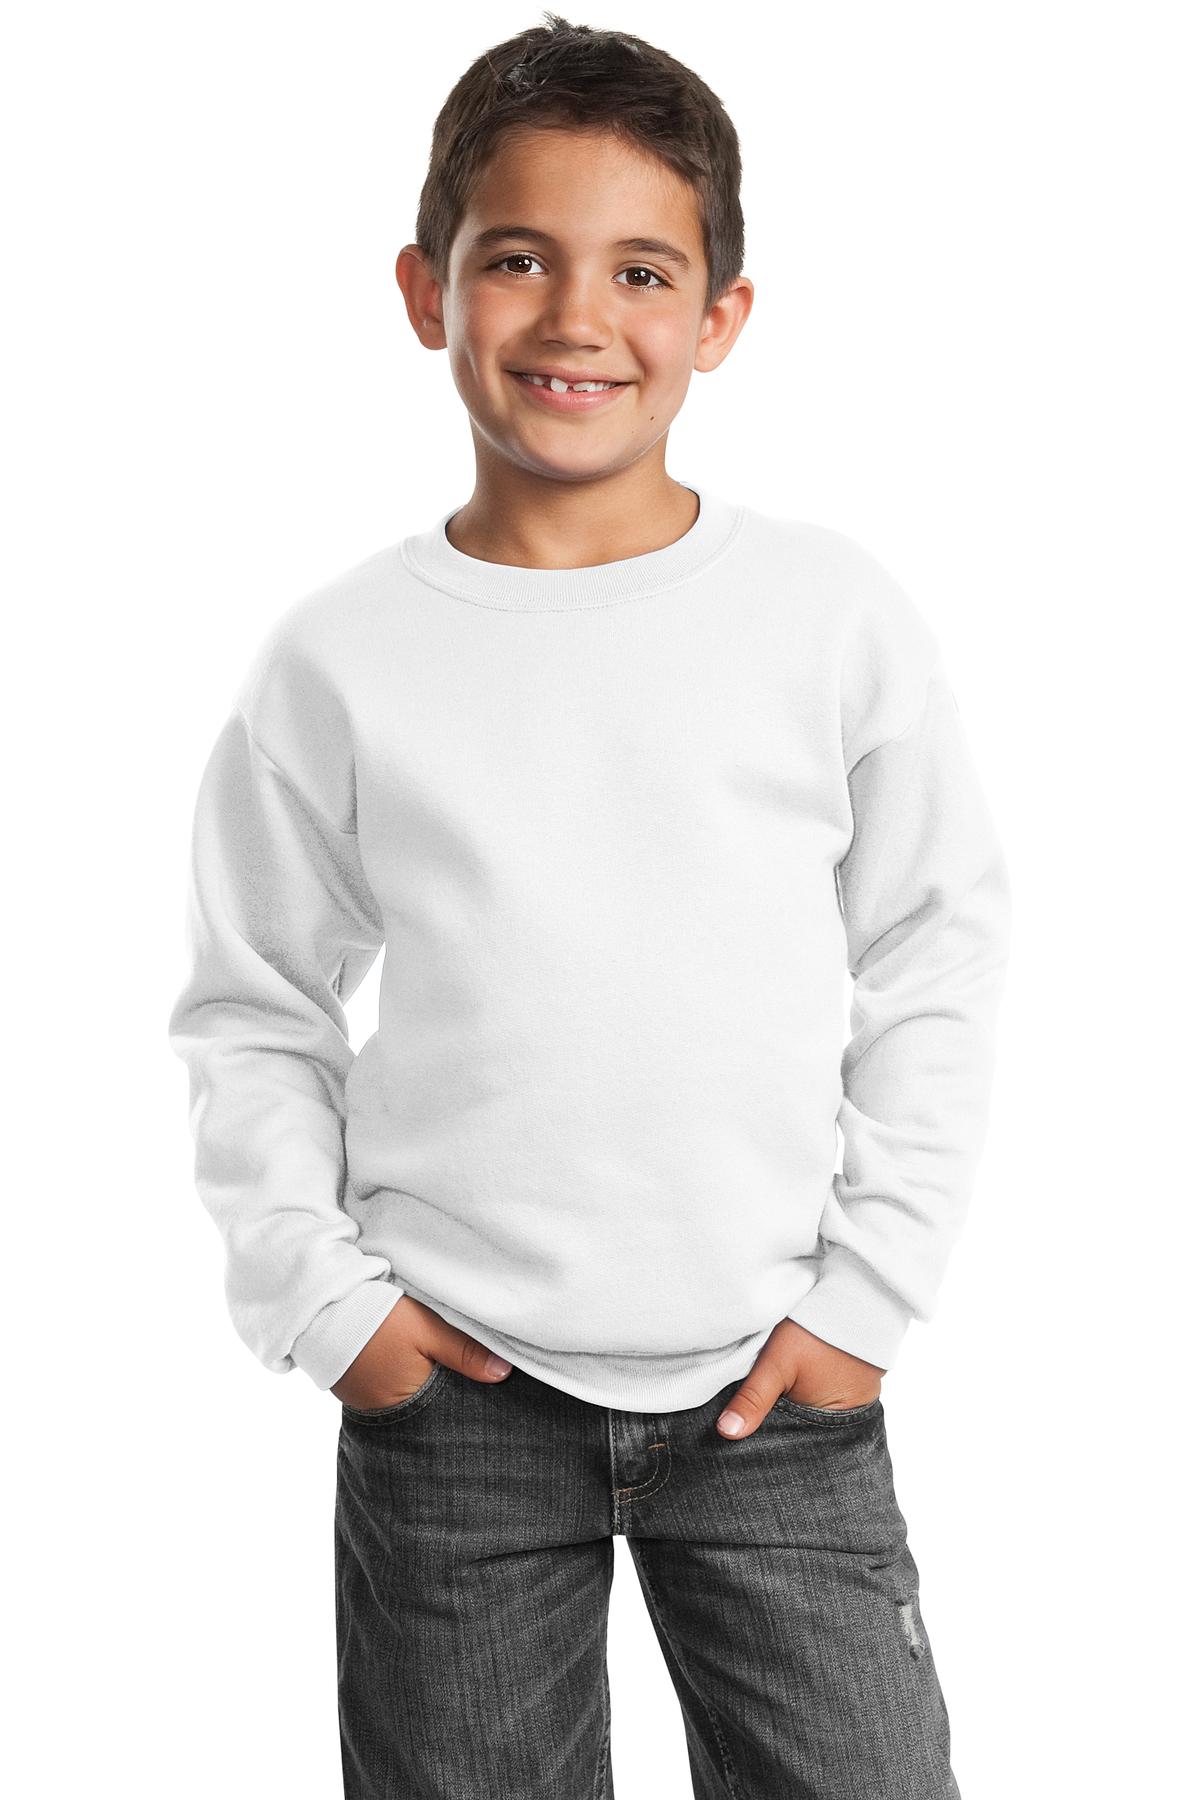 Port & Company Youth Sweatshirts & Fleece for Hospitality ® - Youth Core Fleece Crewneck Sweatshirt.-Port & Company